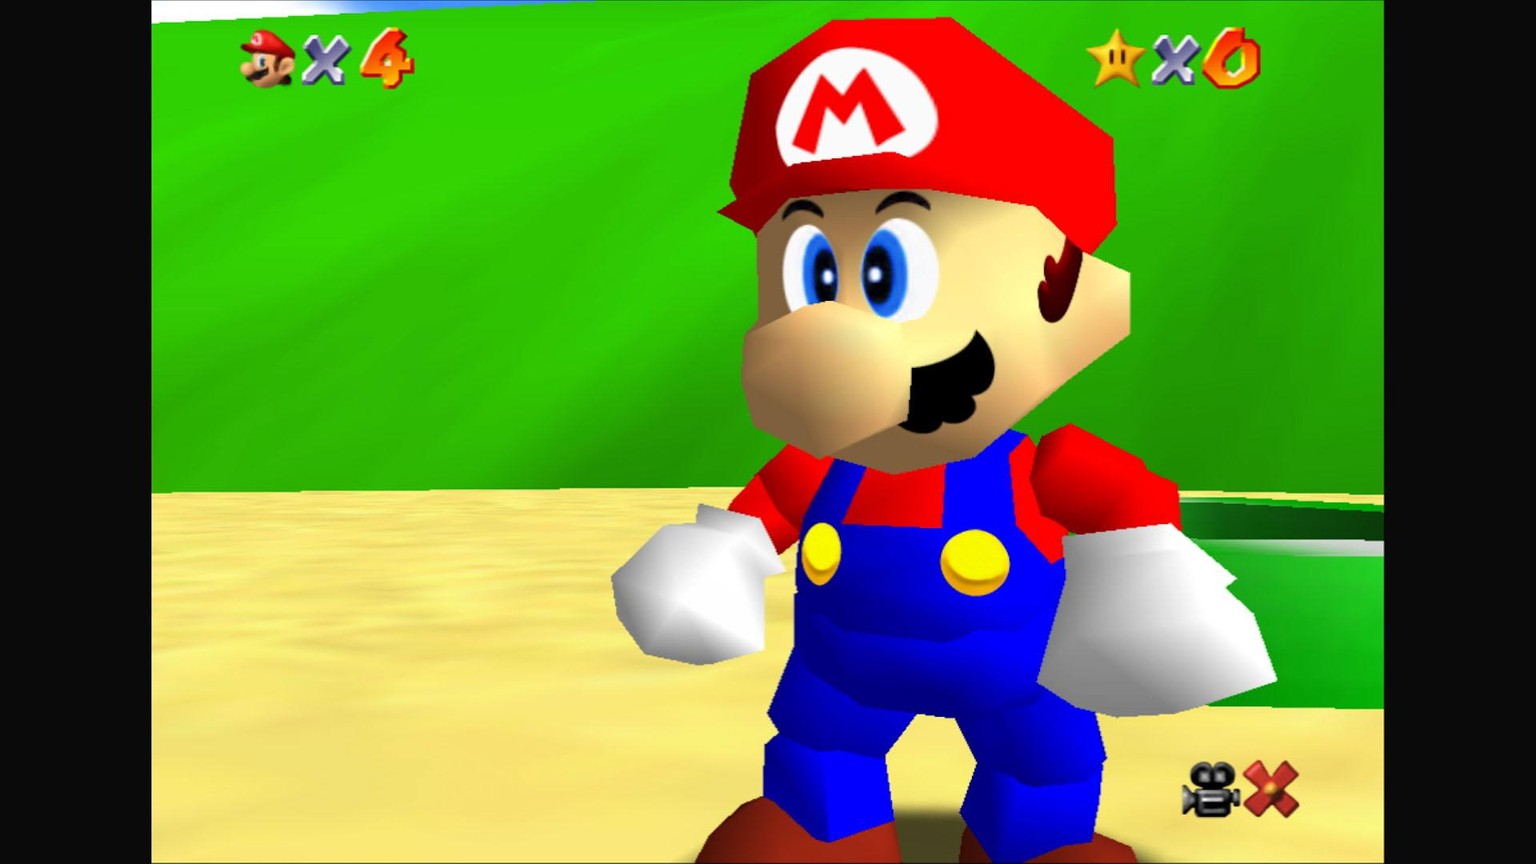 «Super Mario 64» kommt im Oldschool-Format 4:3 daher.